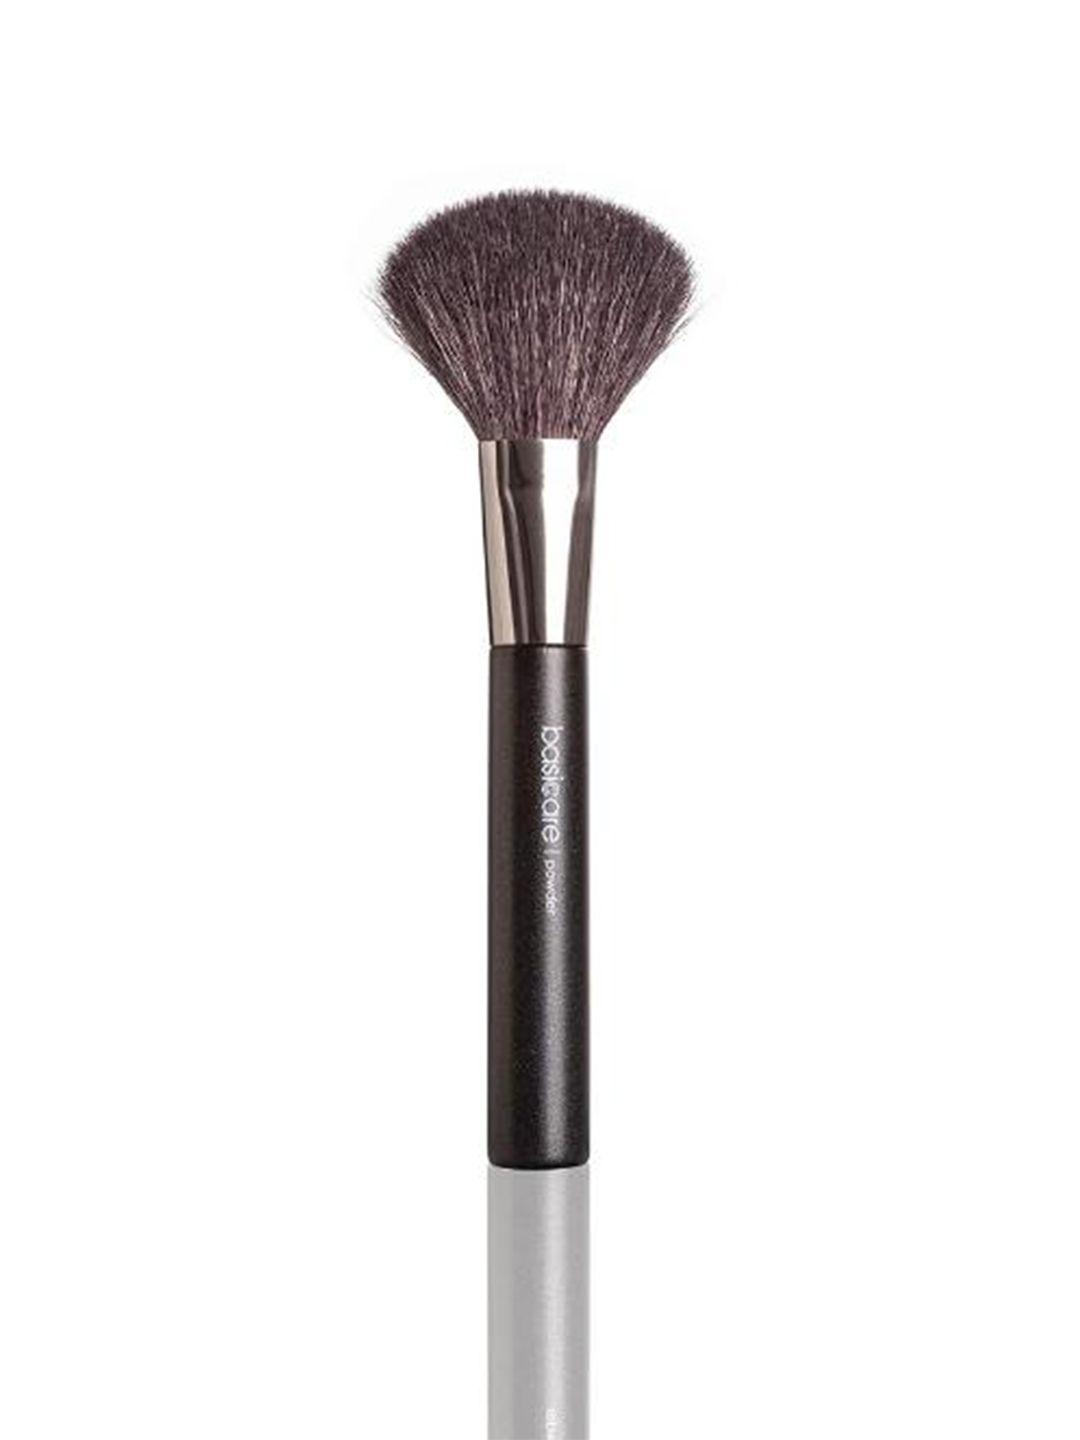 basicare women compact powder makeup brush